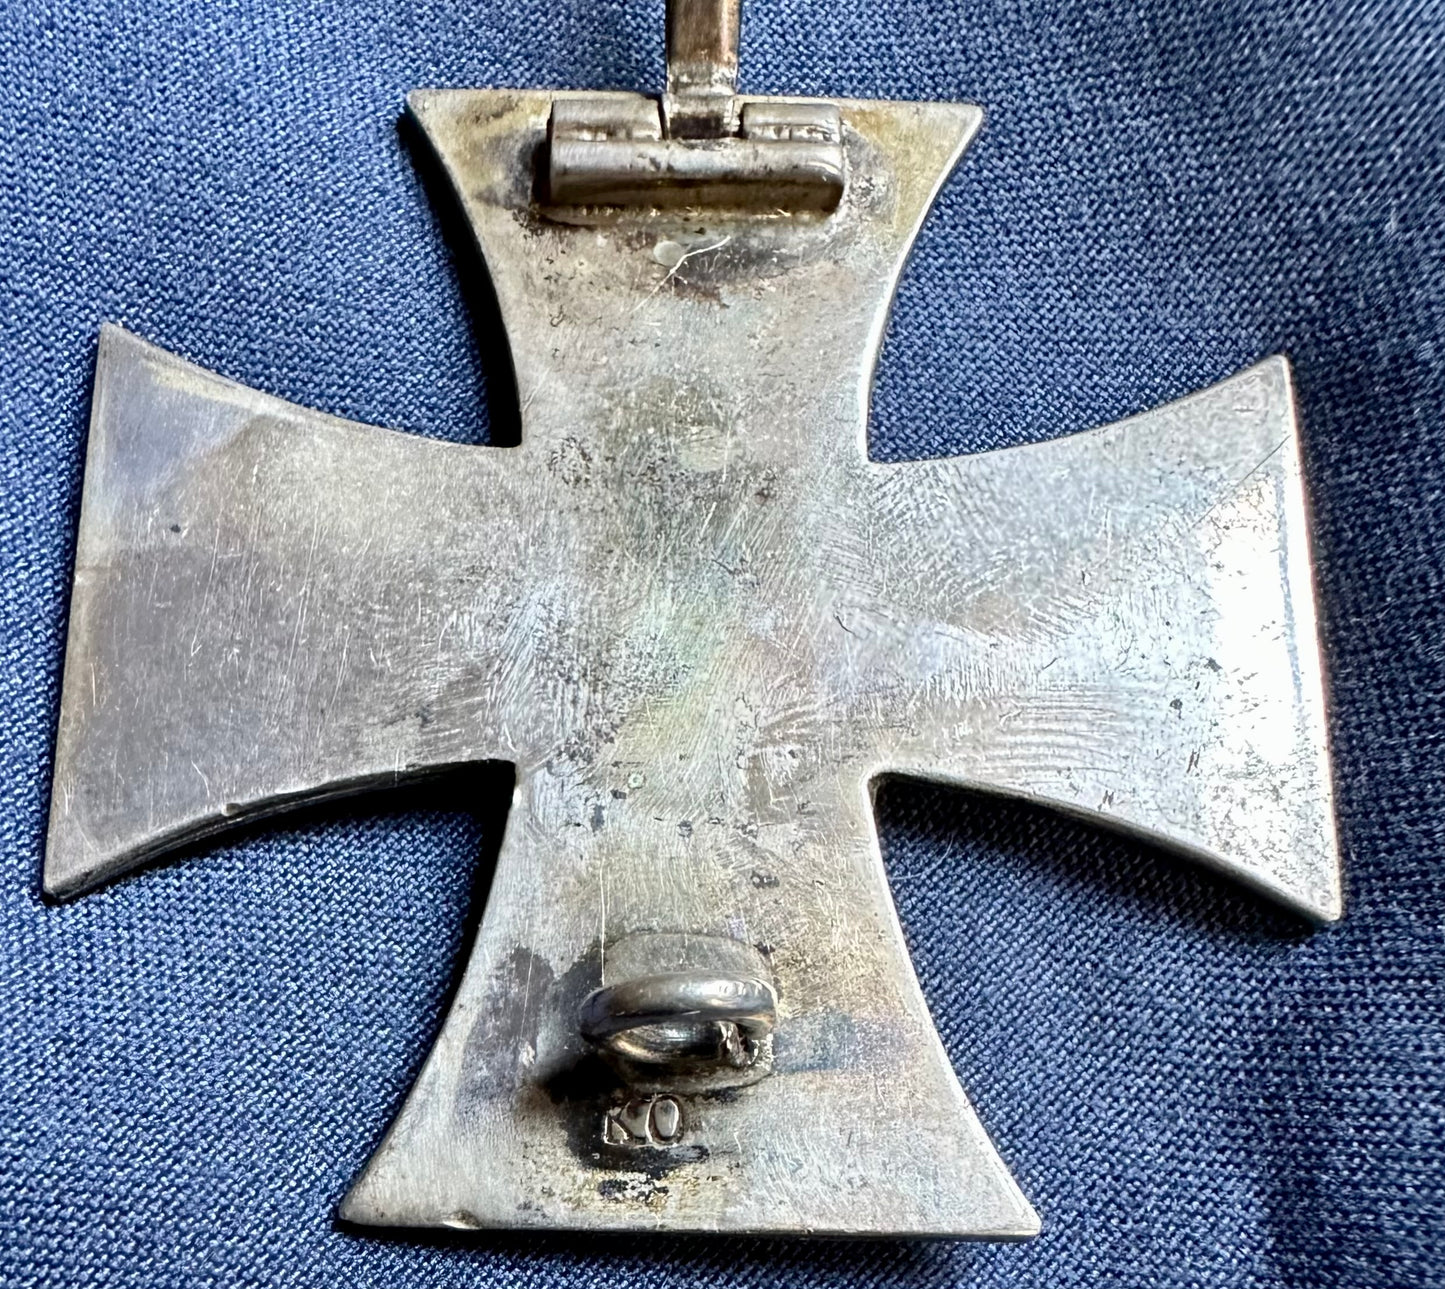 German Iron Cross 1914 Hallmarked "KO" in presentation case - Derrittmeister Militaria Group